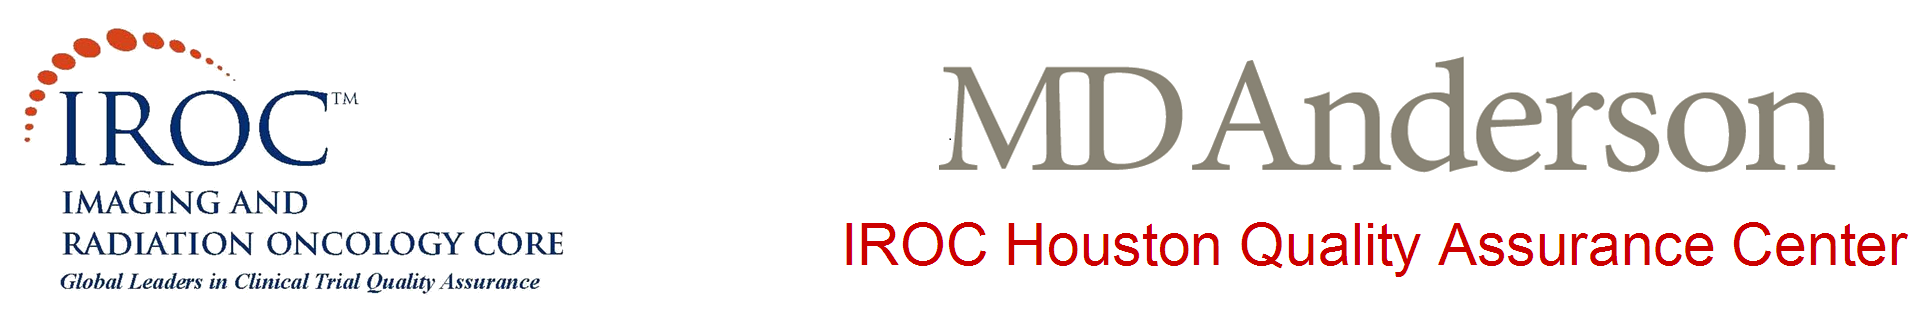 IROC Houston Quality Assurance Center